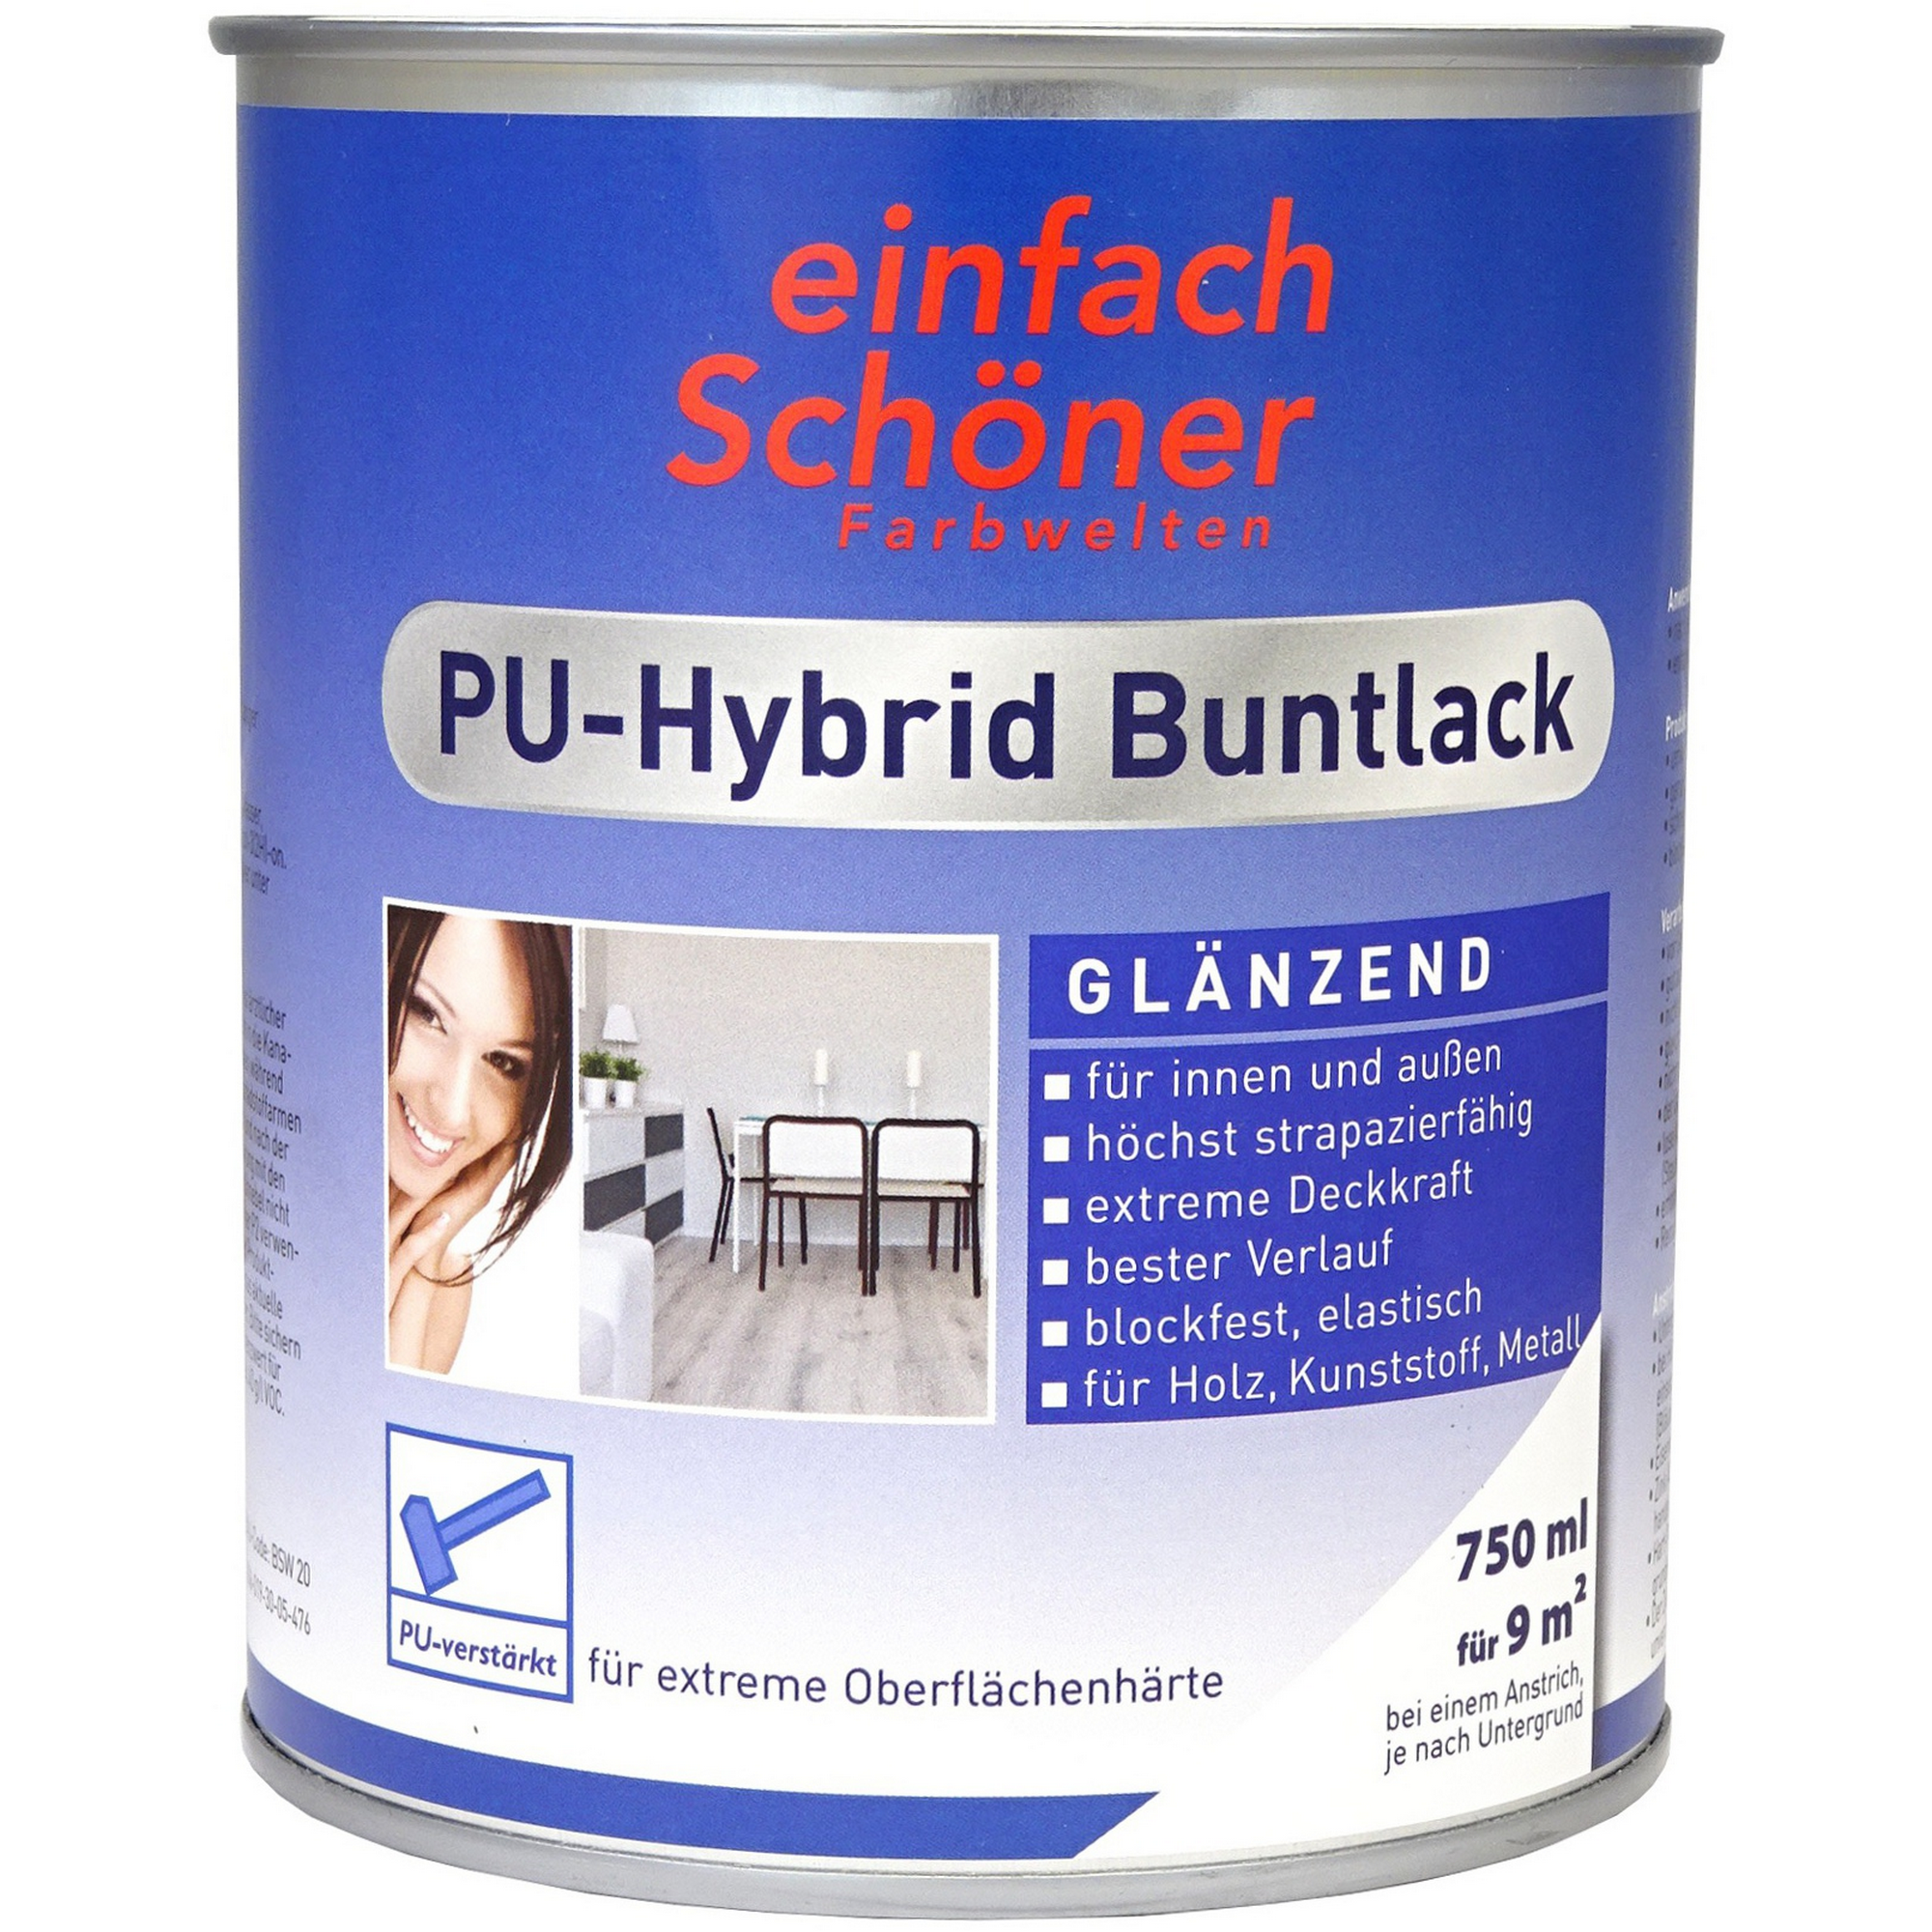 PU-Hybrid Buntlack silbergrau glänzend 750 ml + product picture